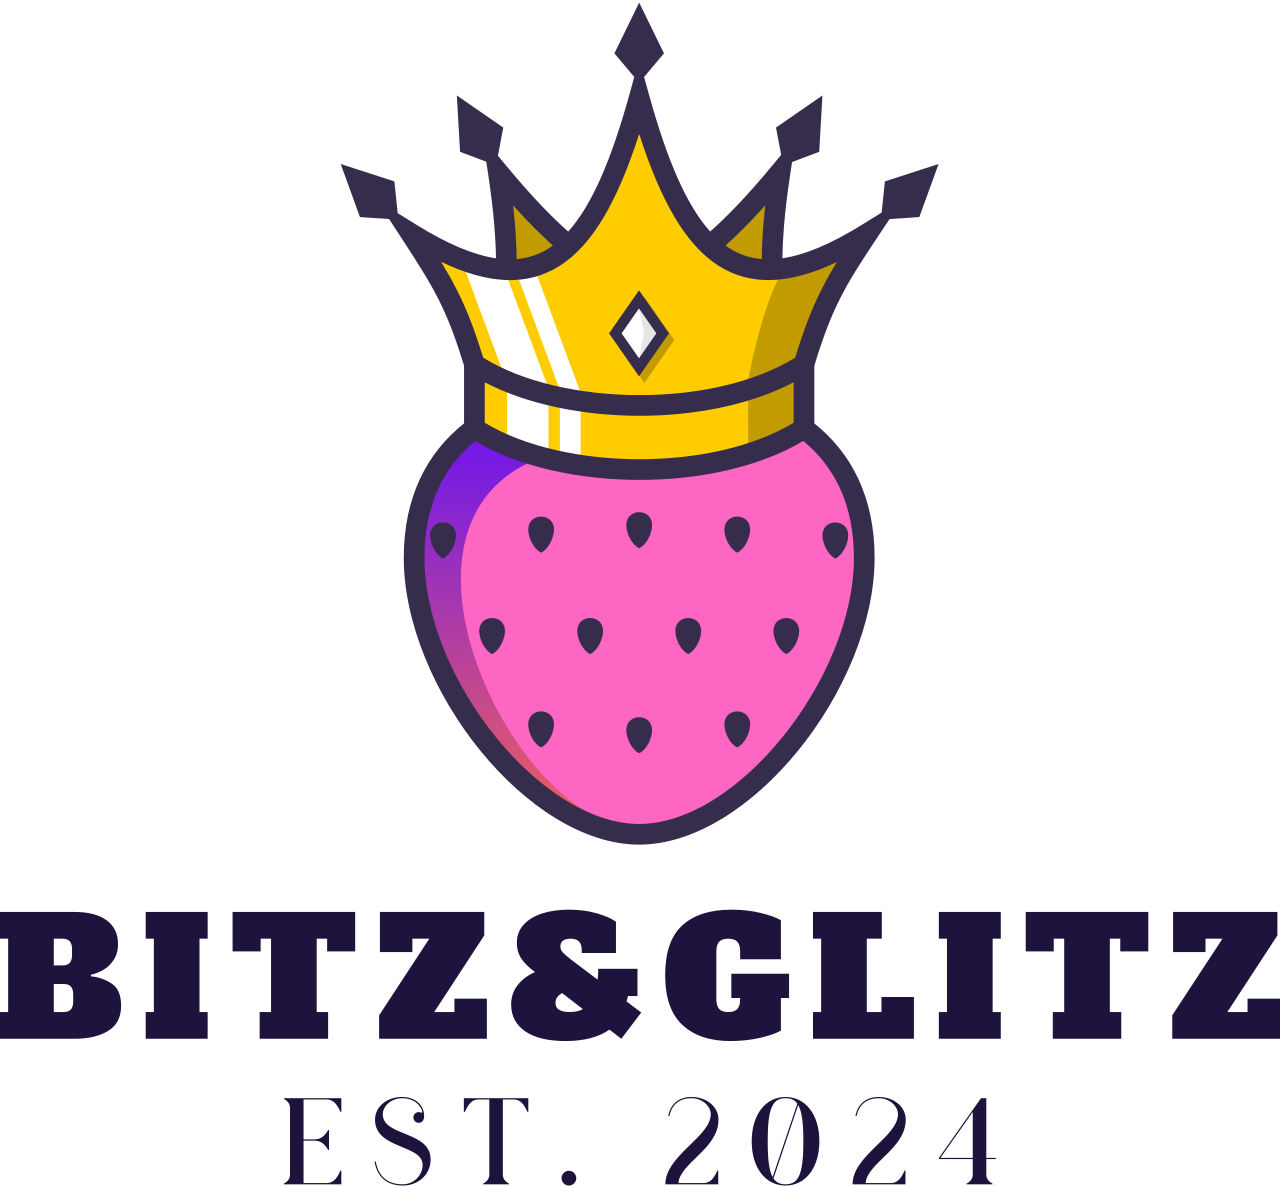 Bitz&Glitz's logo